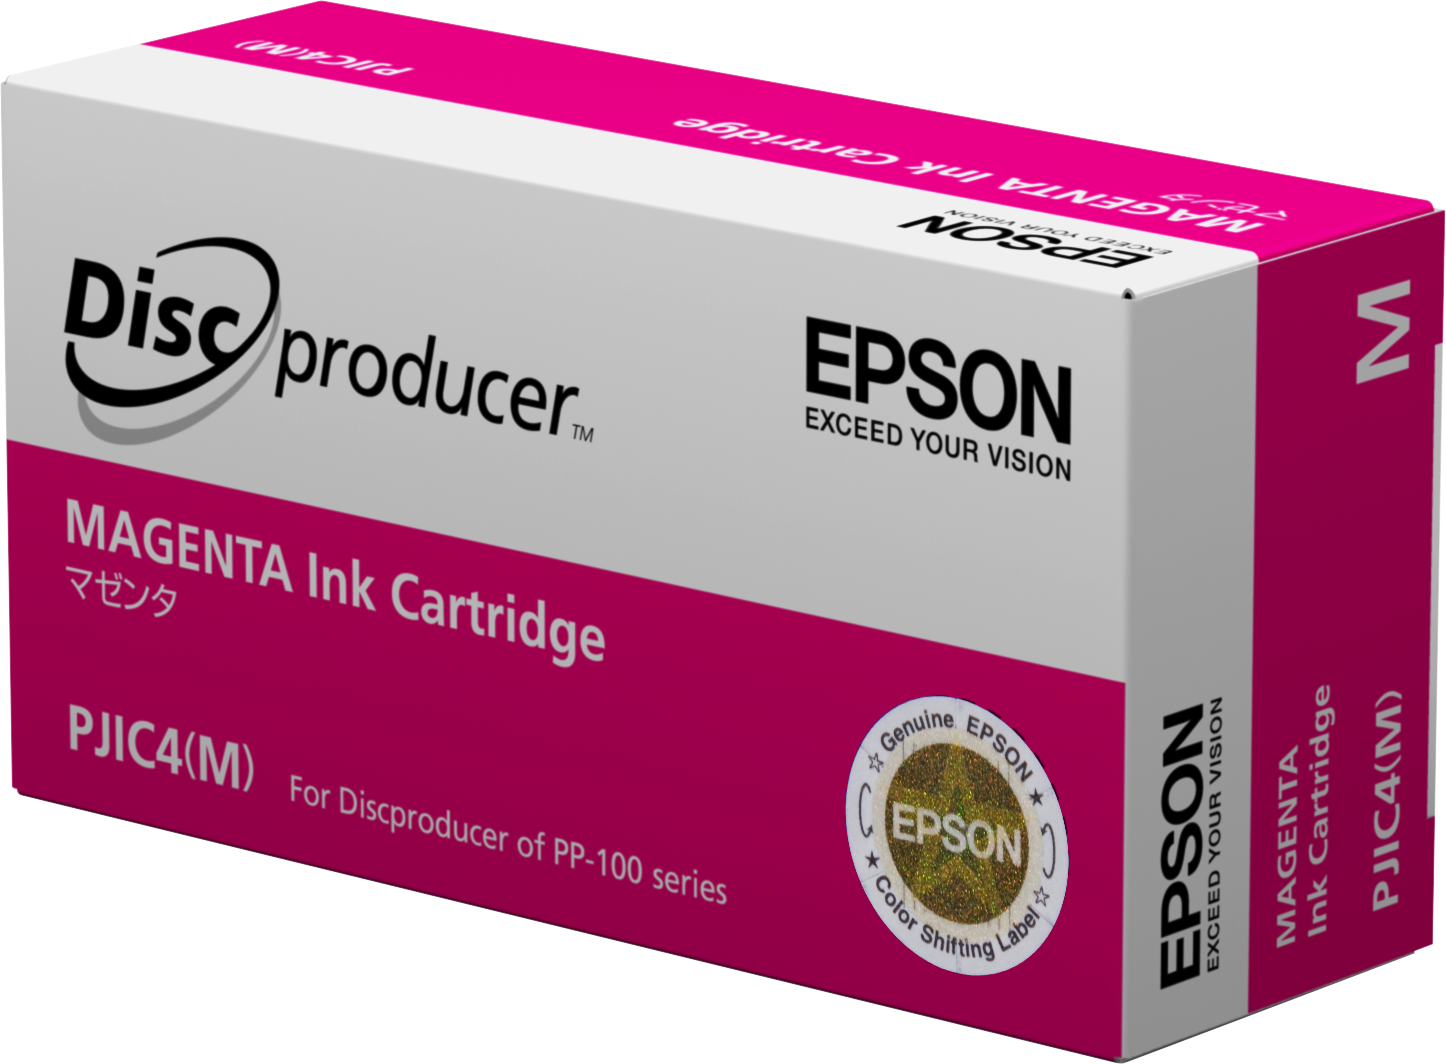 Epson Discproducer Ink Cartridge, Magenta (MOQ=10)